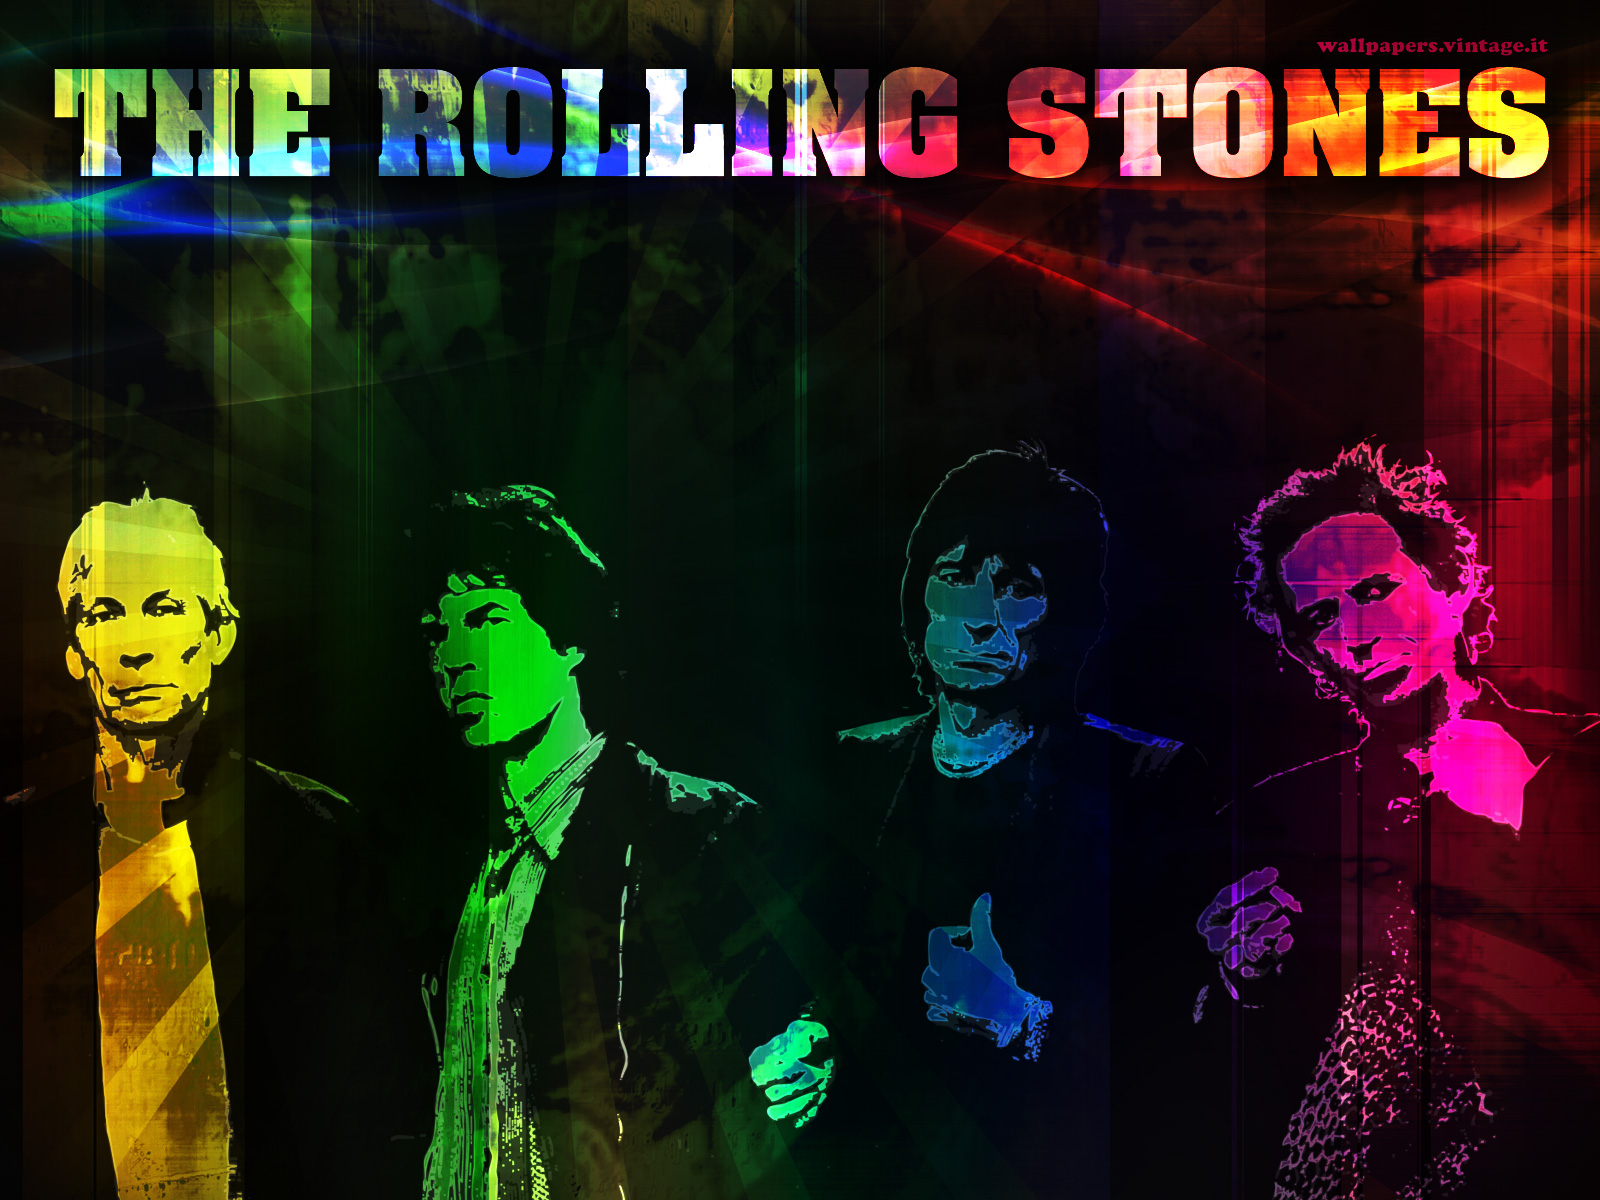 Rolling Stones Iphone Wallpapers